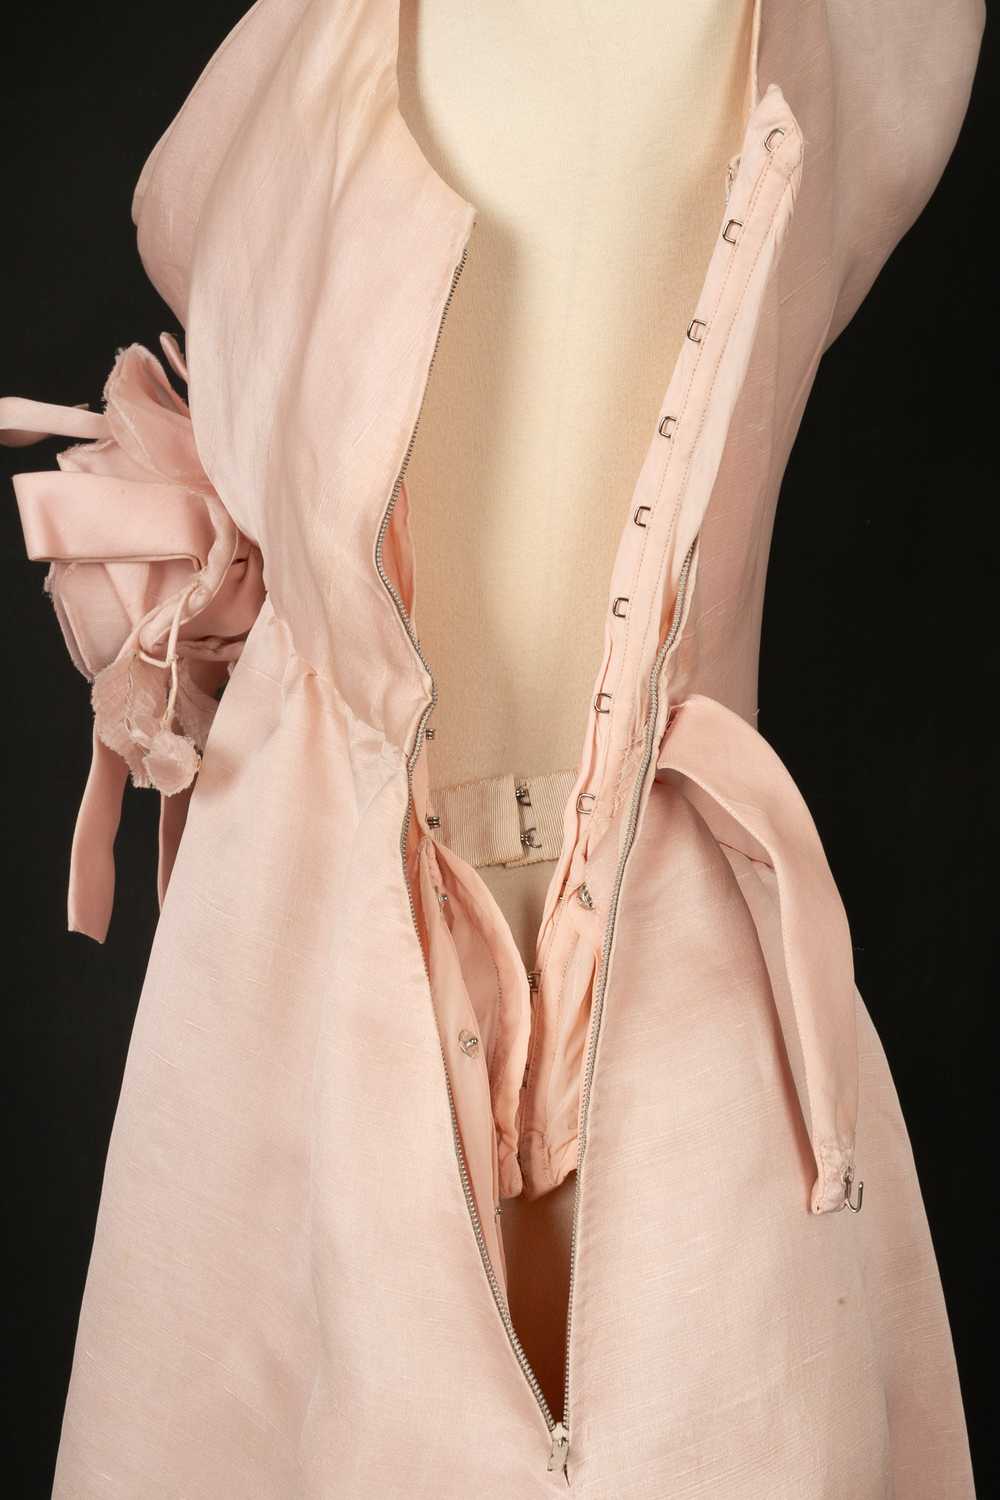 Jeanne Lanvin pink dress Haute Couture circa 1965 - image 8